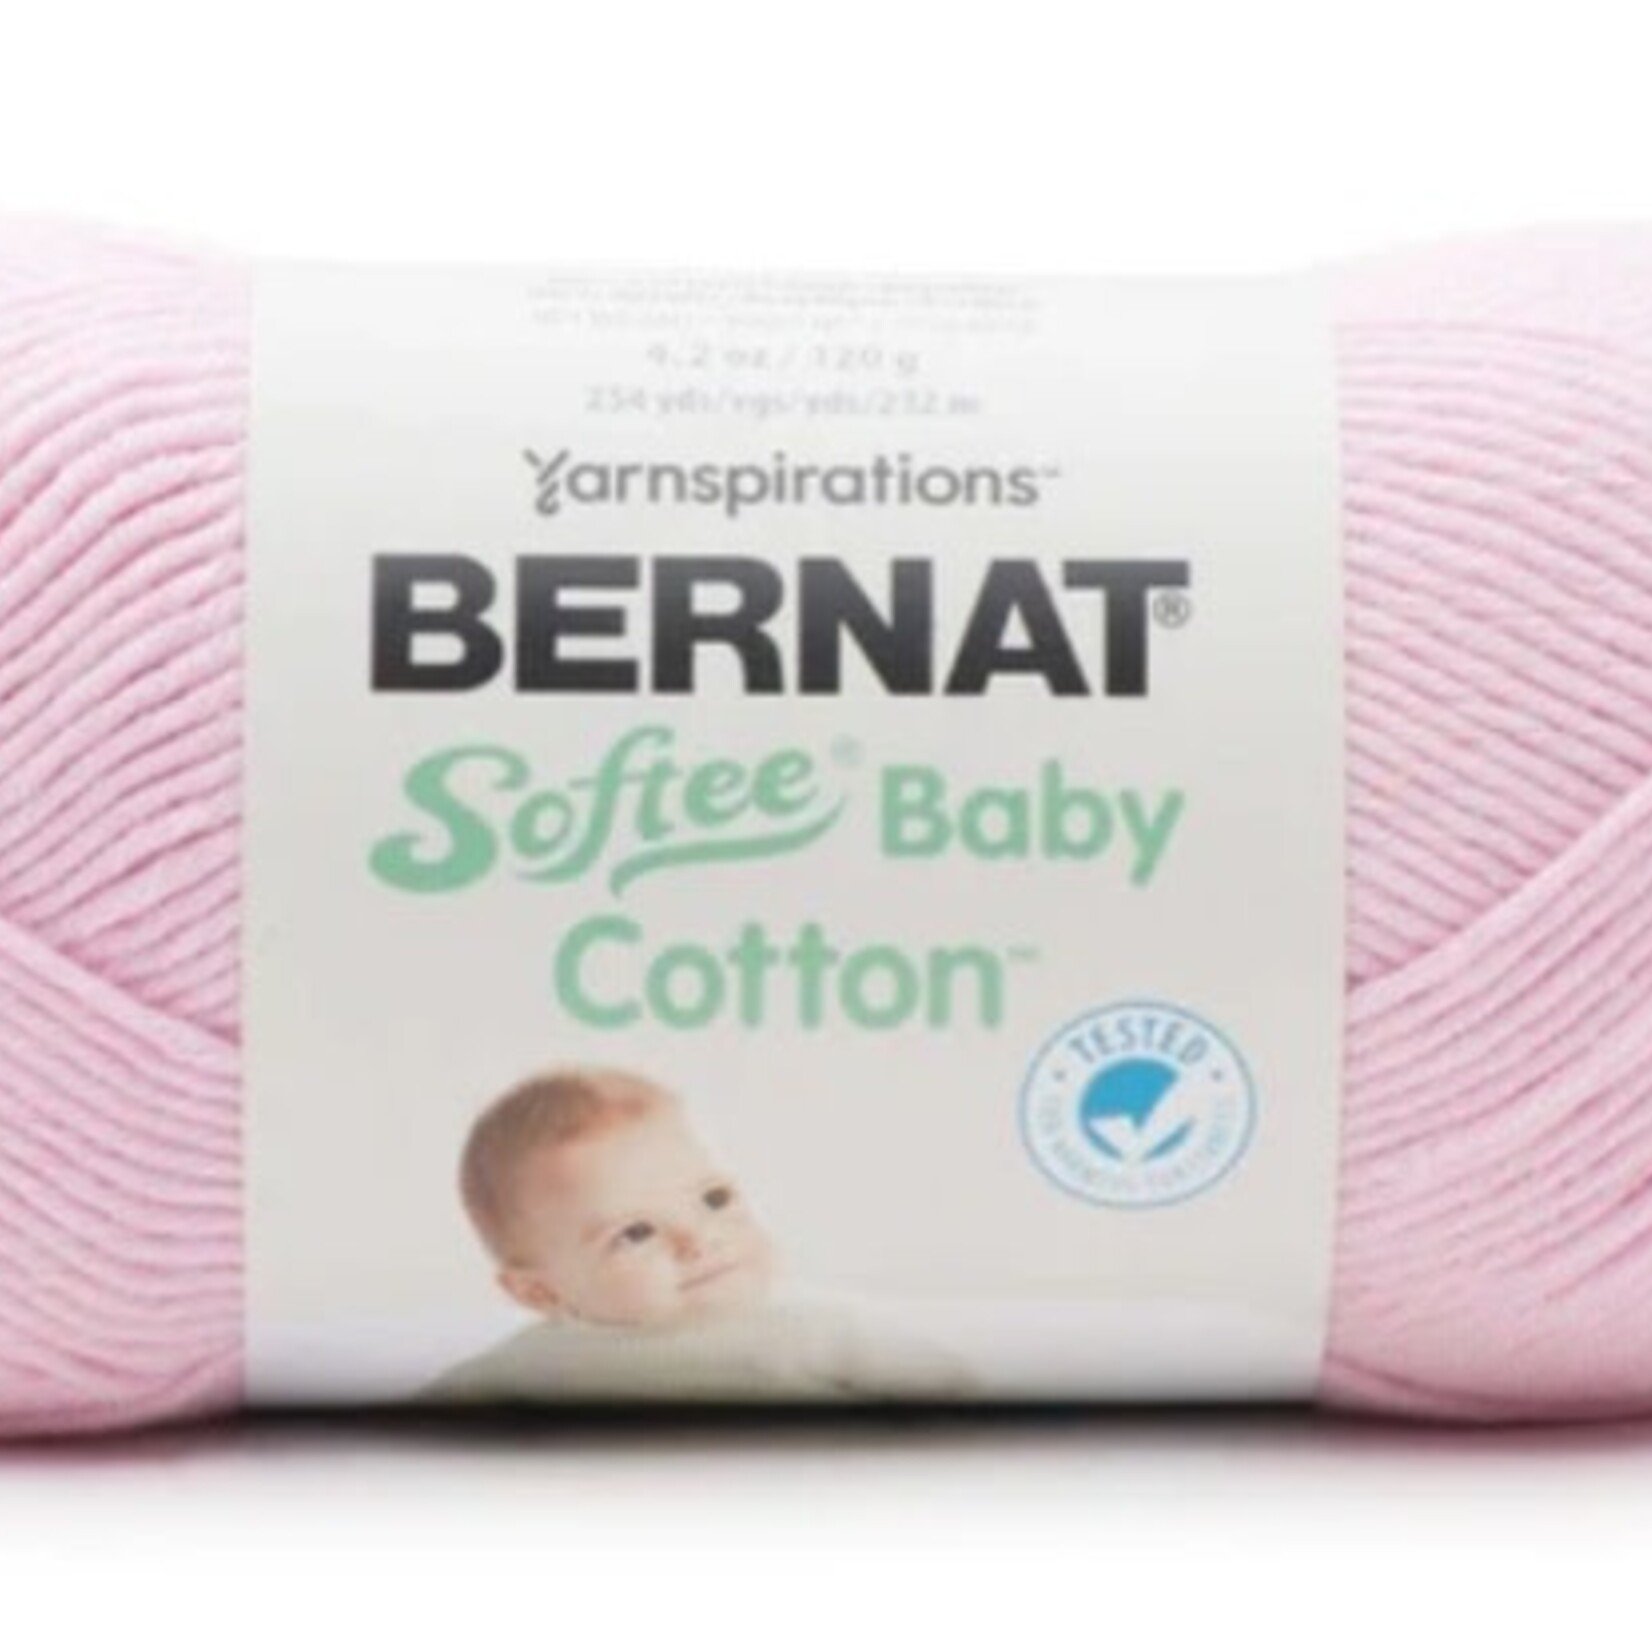 Bernat Softee Baby Cotton by Bernat